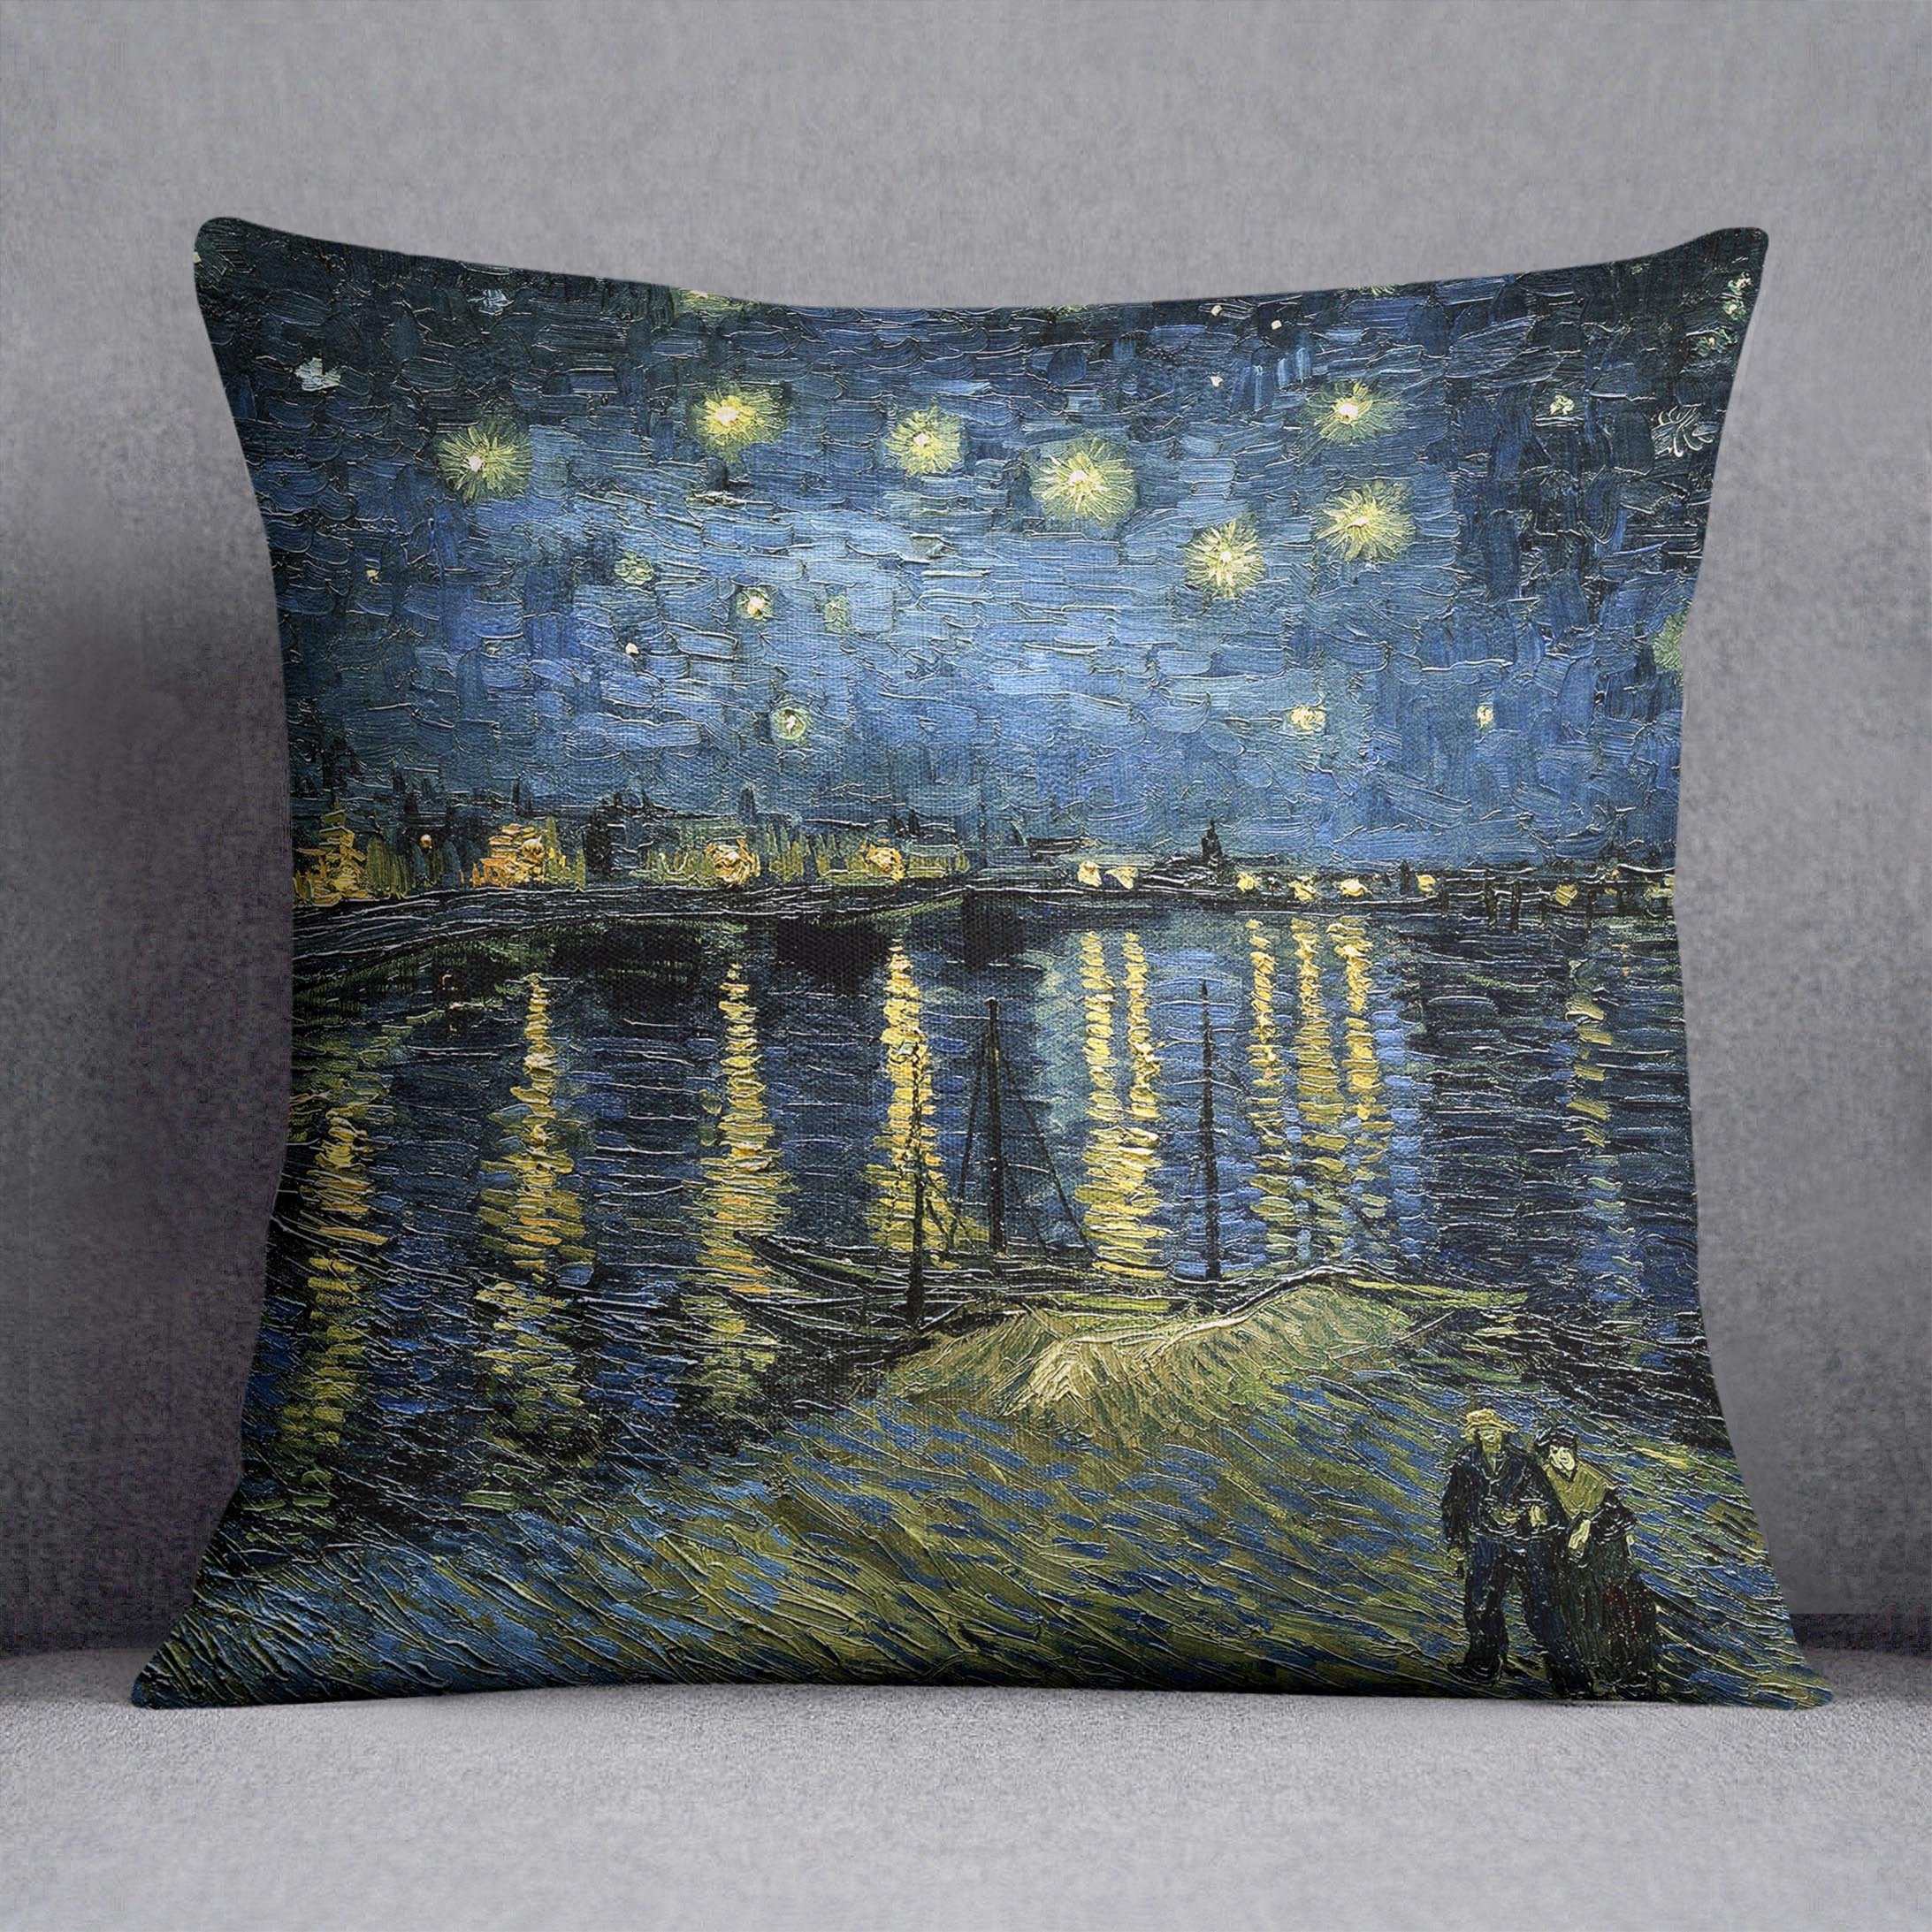 Van Gogh Starry Night over the Rhone Throw Pillow